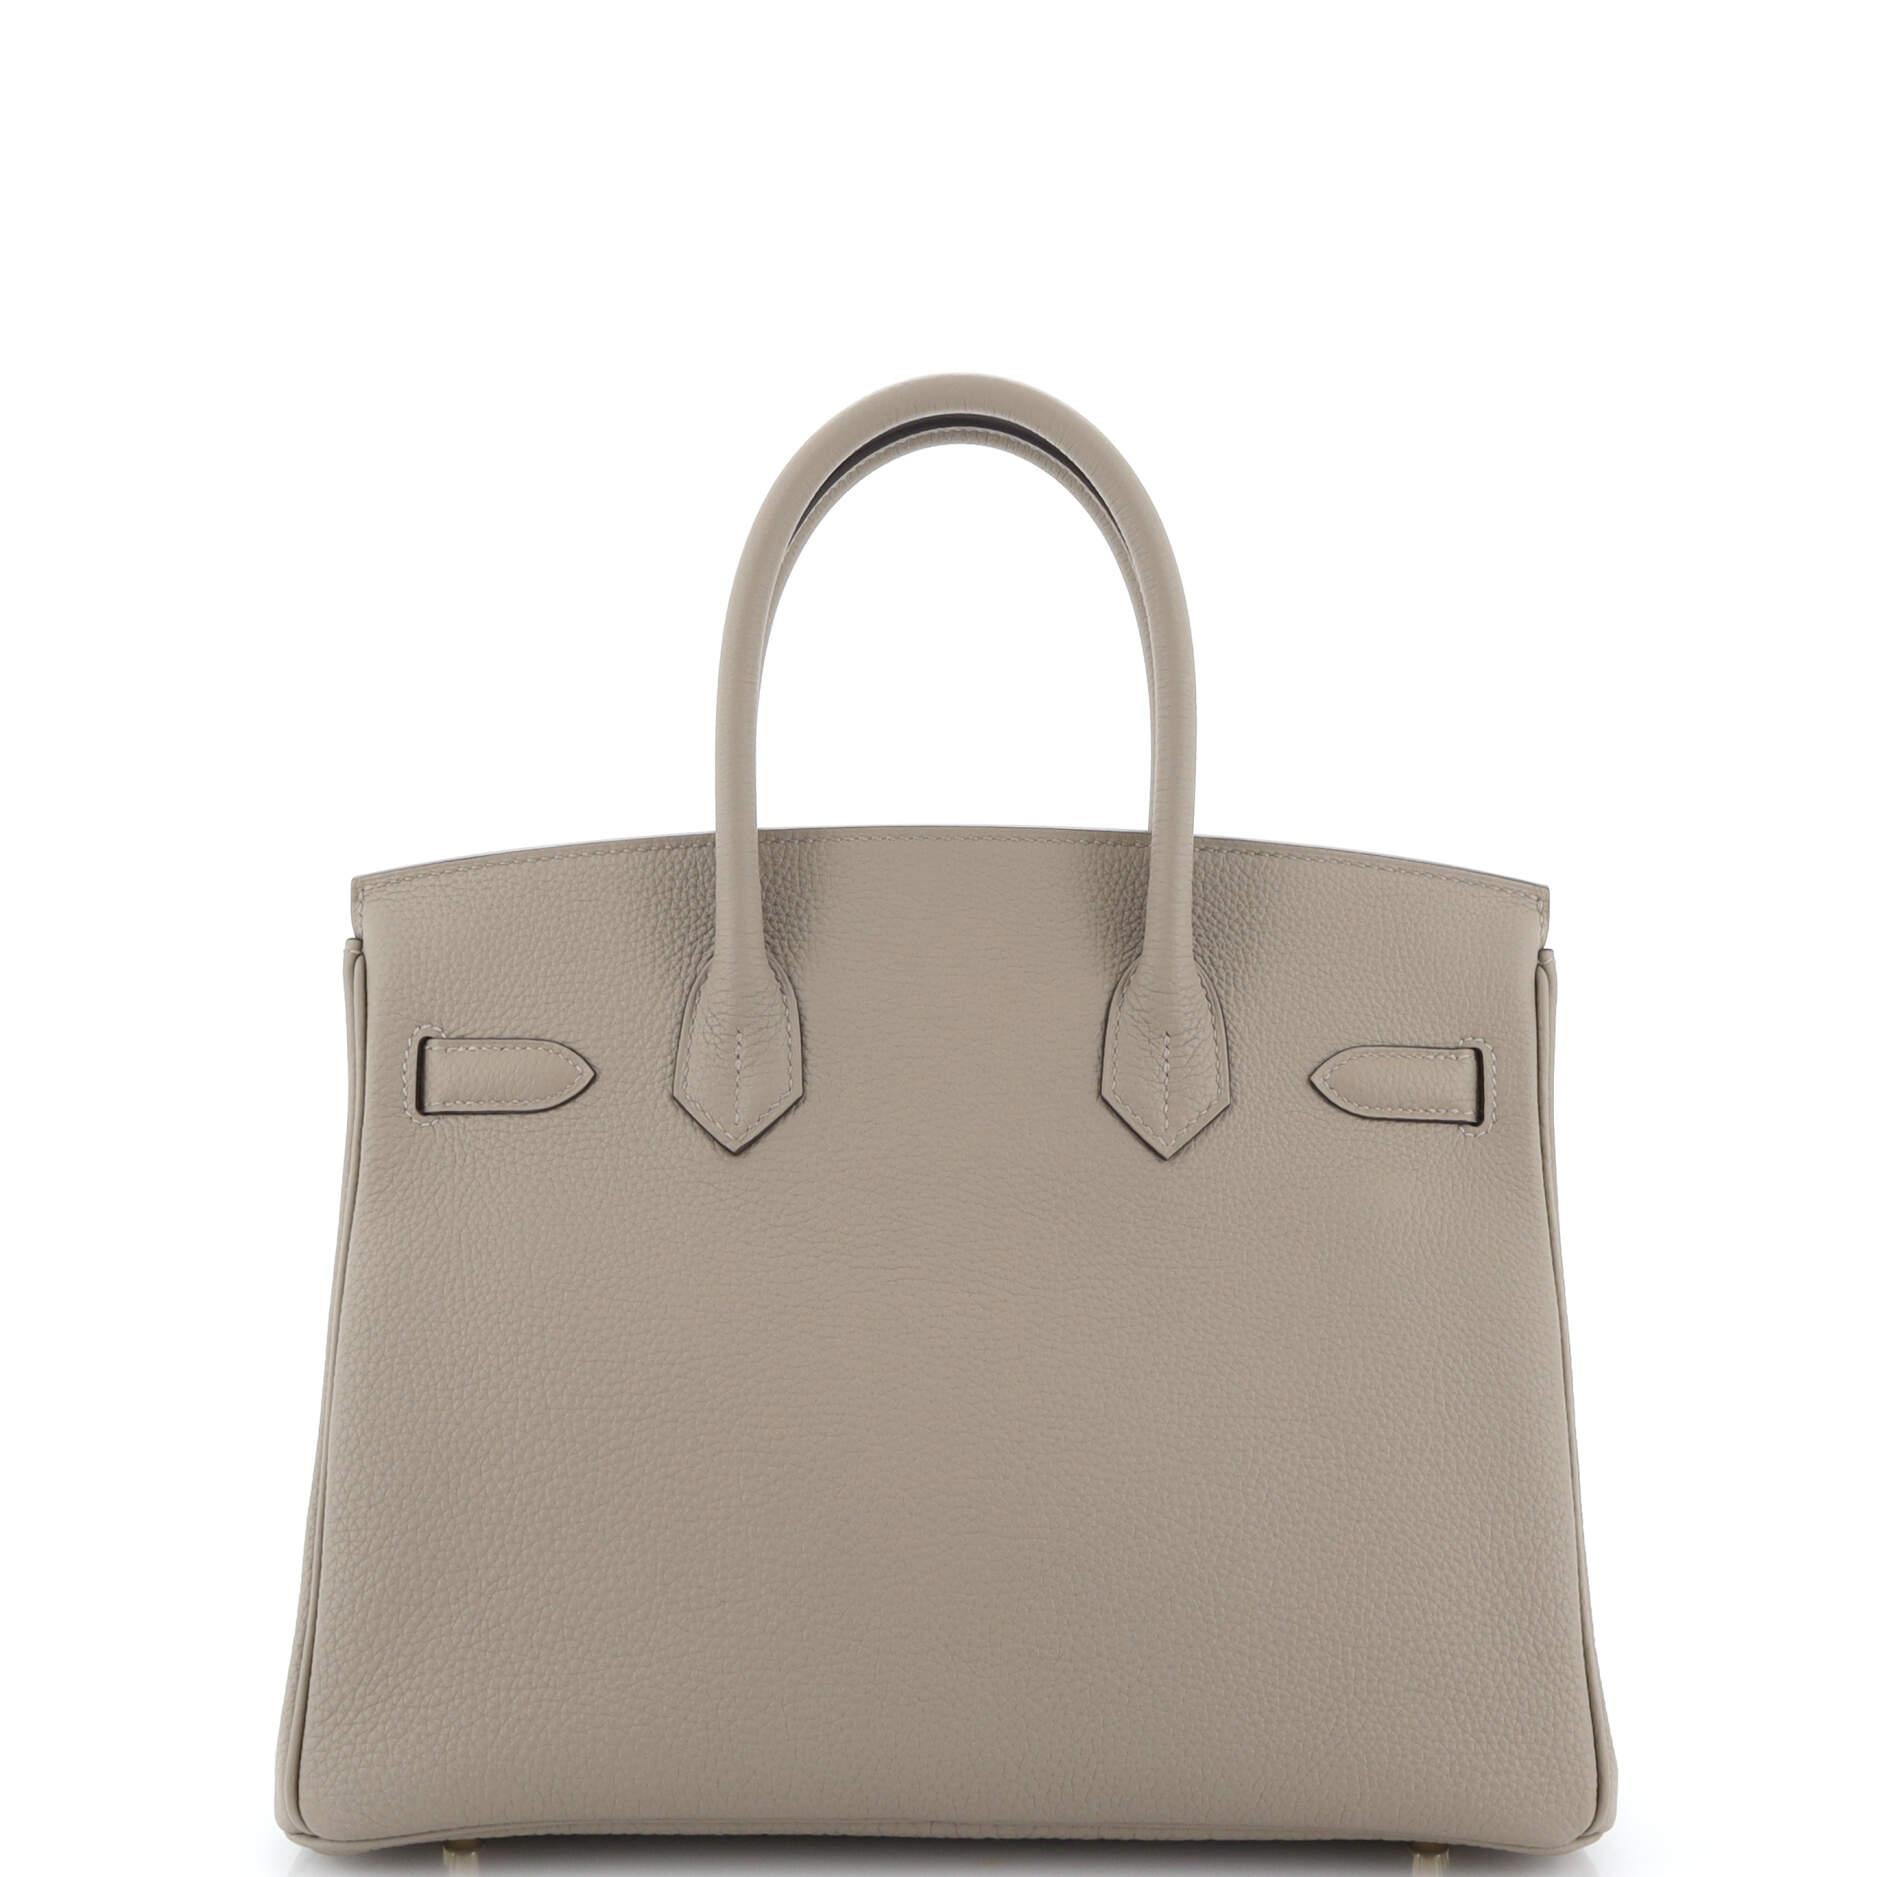 Women's or Men's Hermes Birkin Handbag Grey Togo with Gold Hardware 30